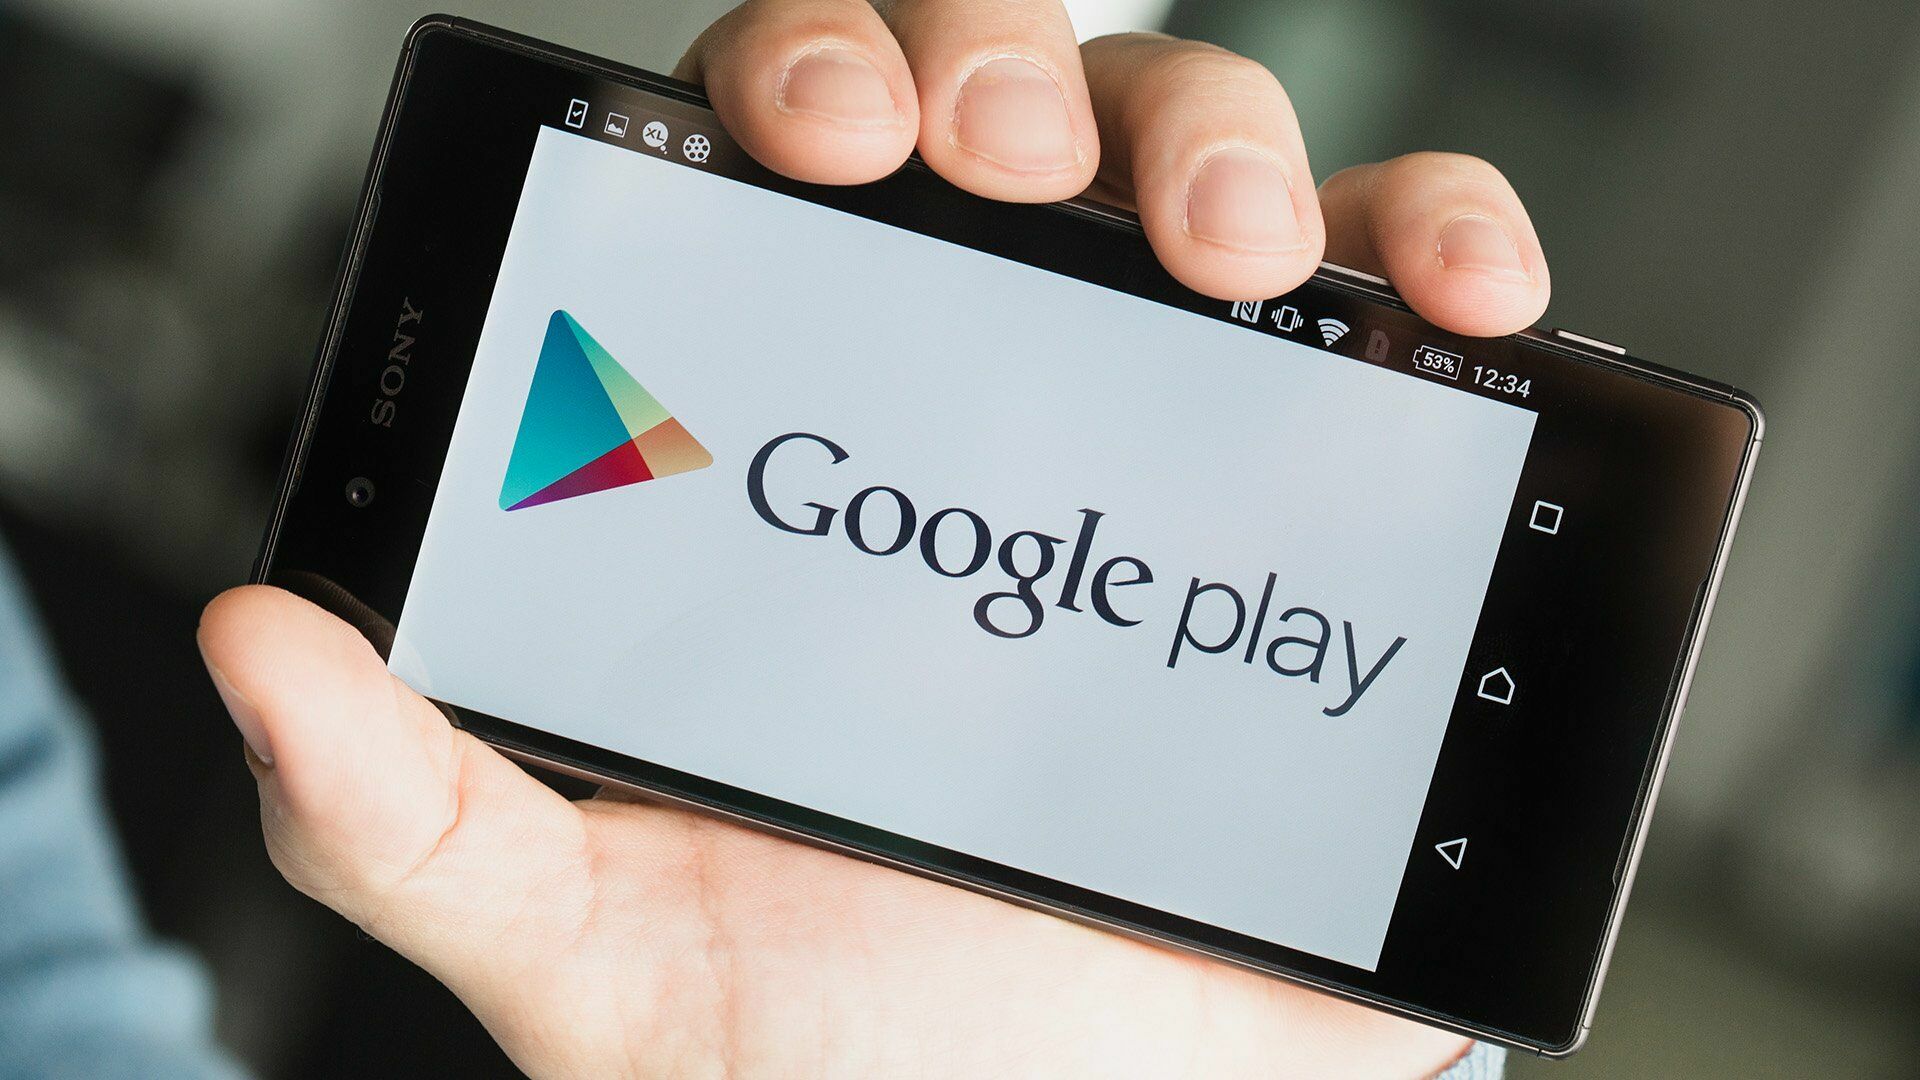 Google play 21. Google Play. Google Play Store. Google Play фото. Play Market смартфон.